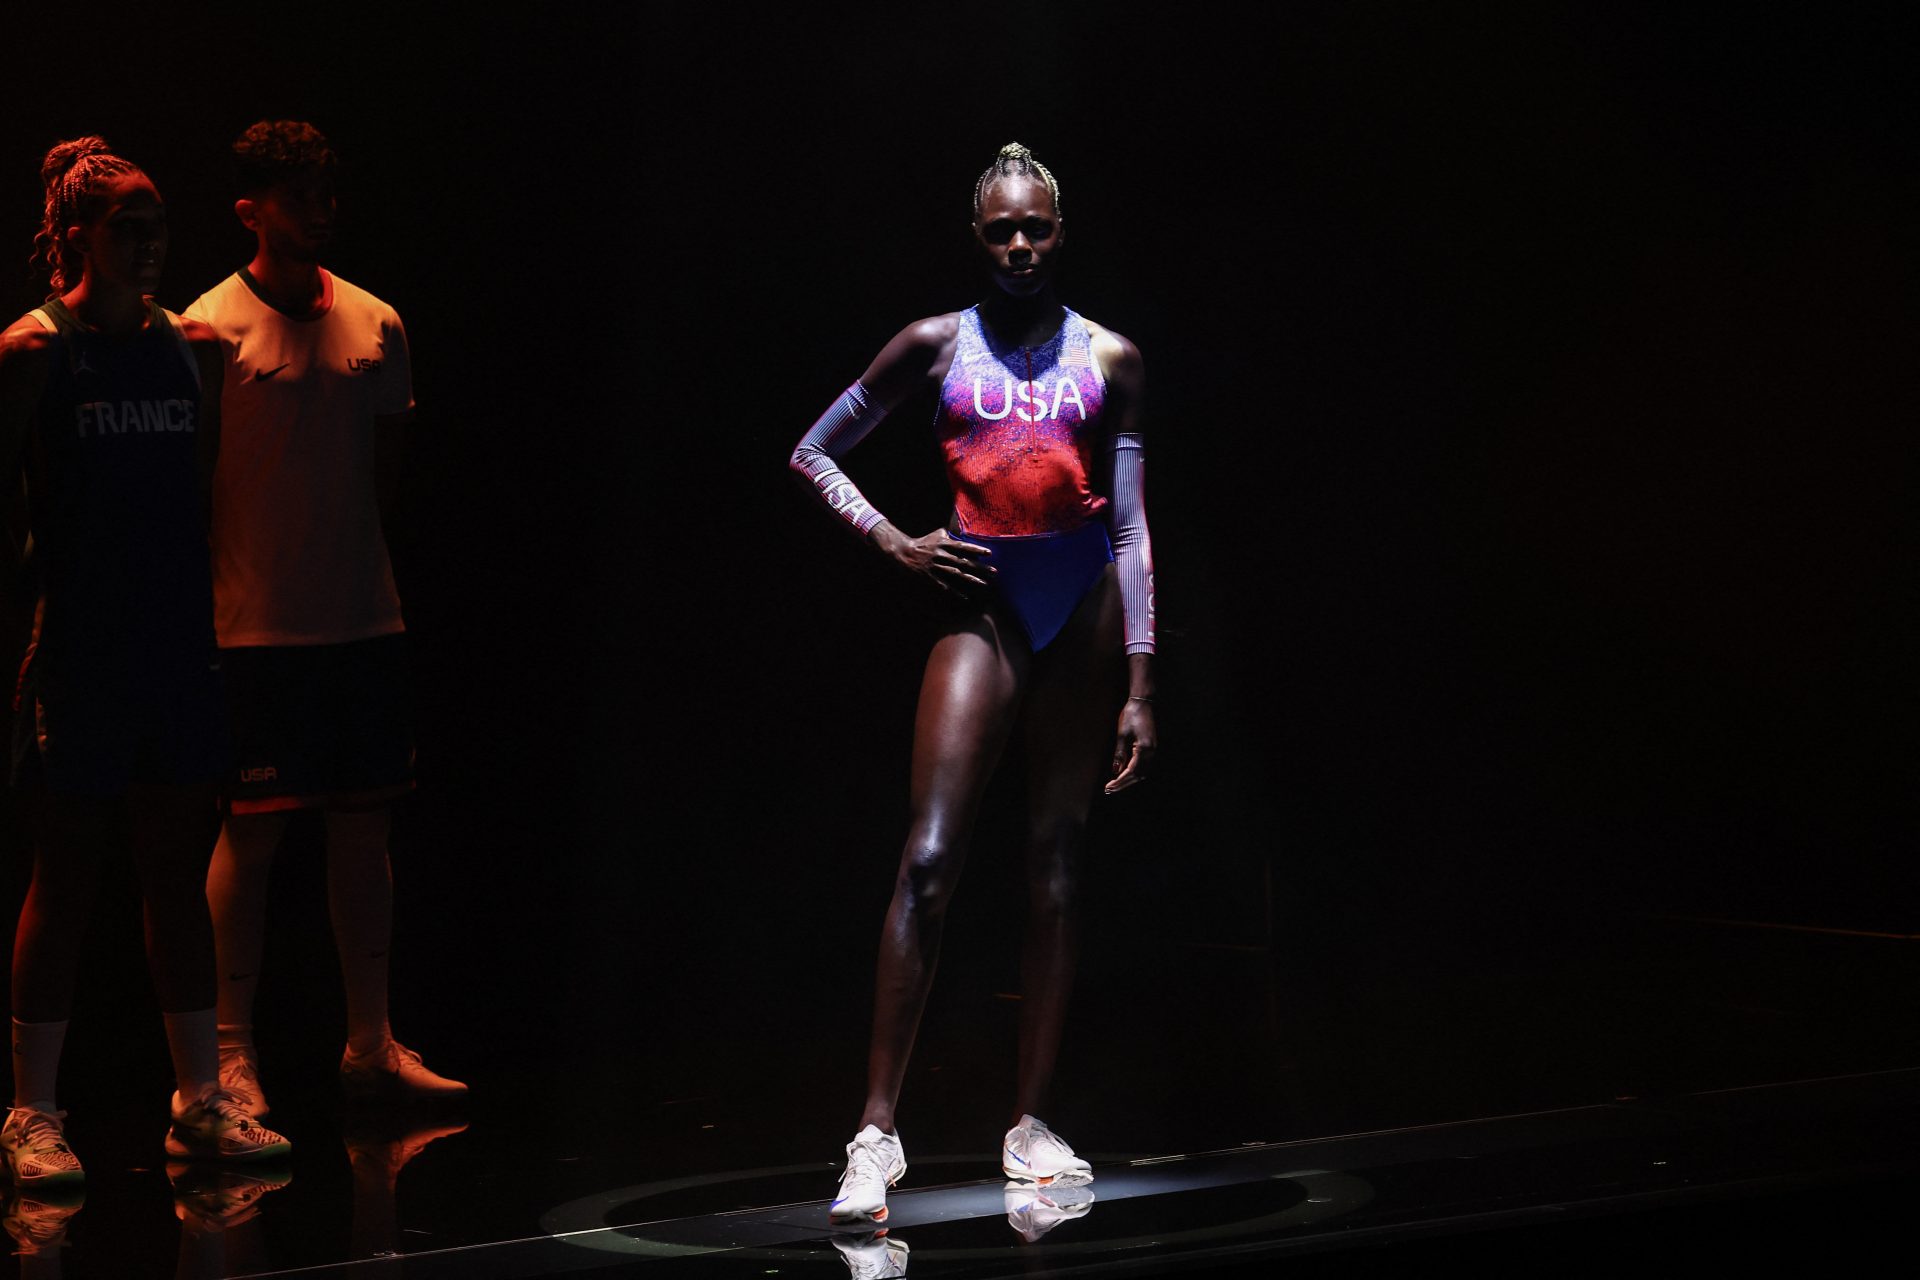 Nike se llena de críticas por uniformes "sexistas" para atletas olímpicas de EU